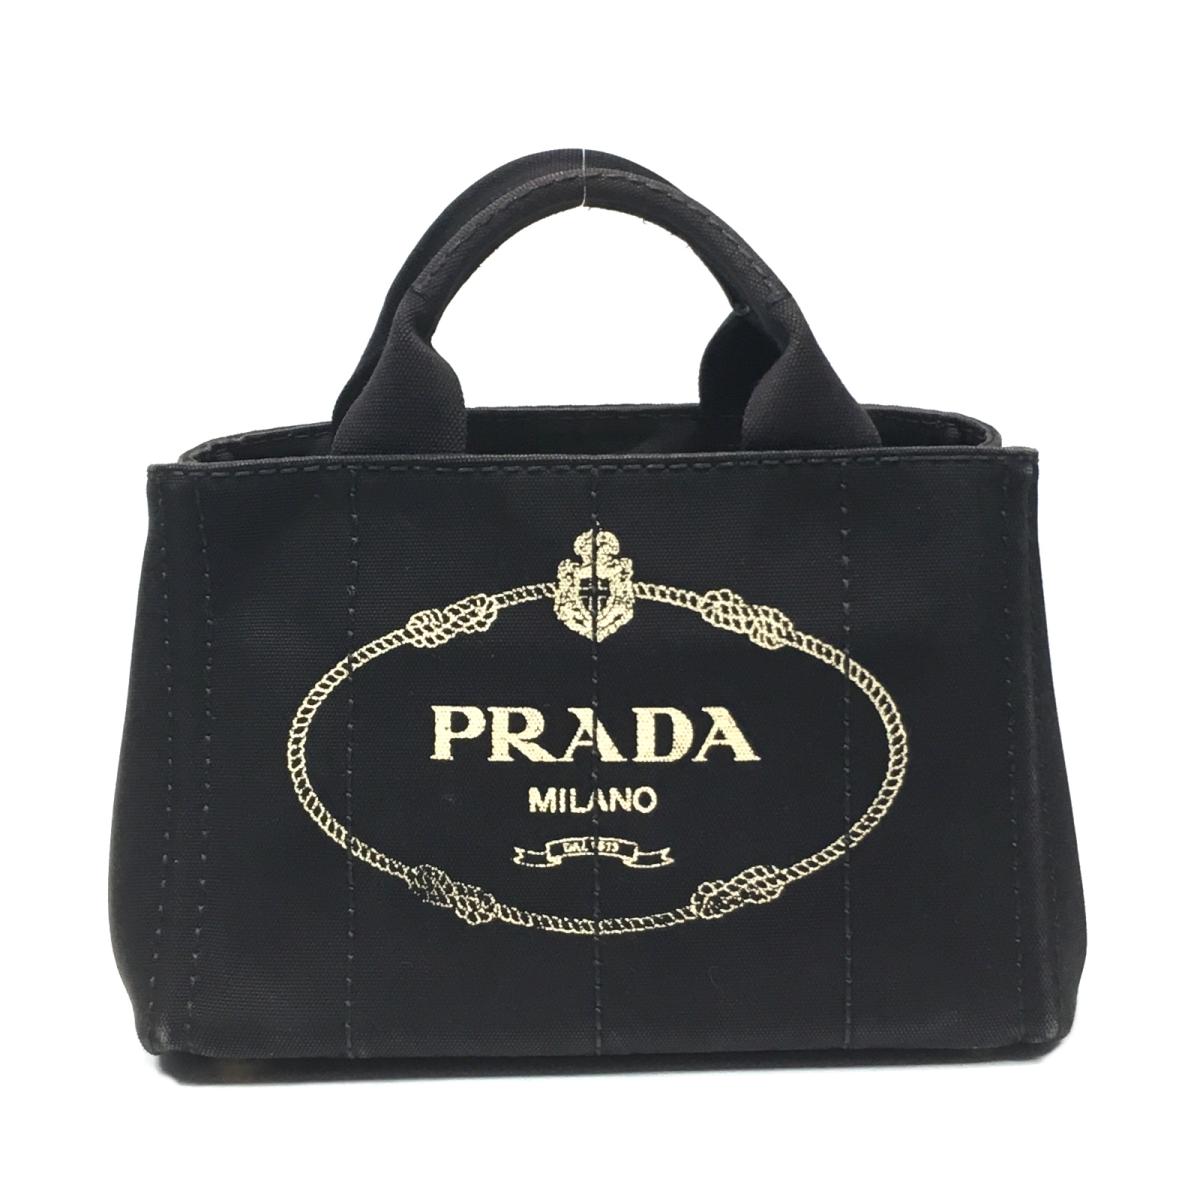 2nd hand prada bags